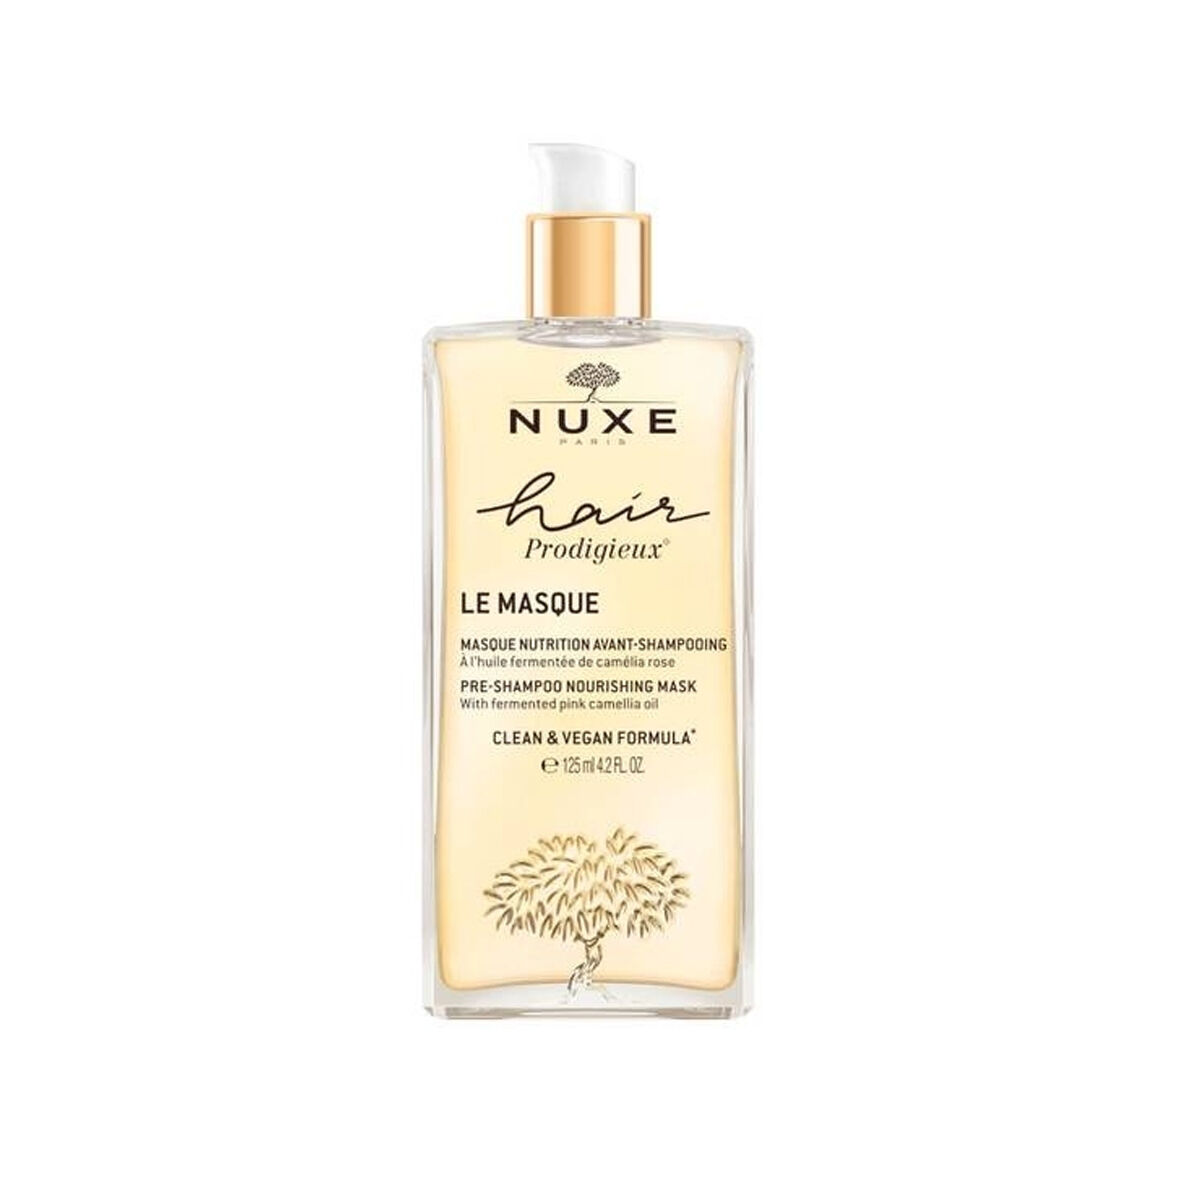 Nuxe Hair Prodigieux Le Masque Pre-shampoo Maschera Nutriente Capelli 125ml